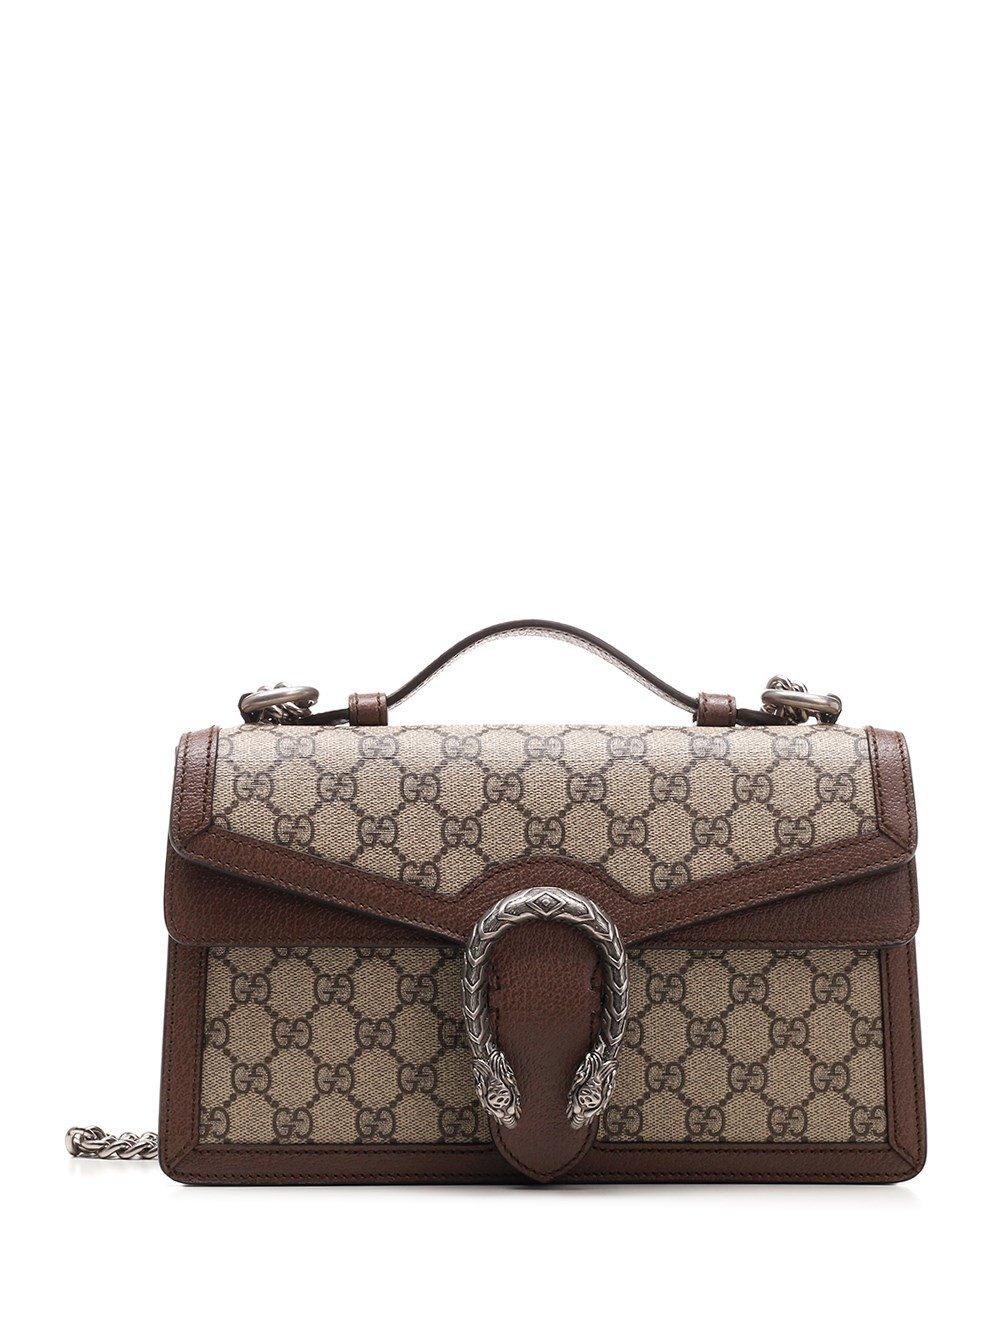 Gucci Dionysus gg Handle Bag in Natural | Lyst